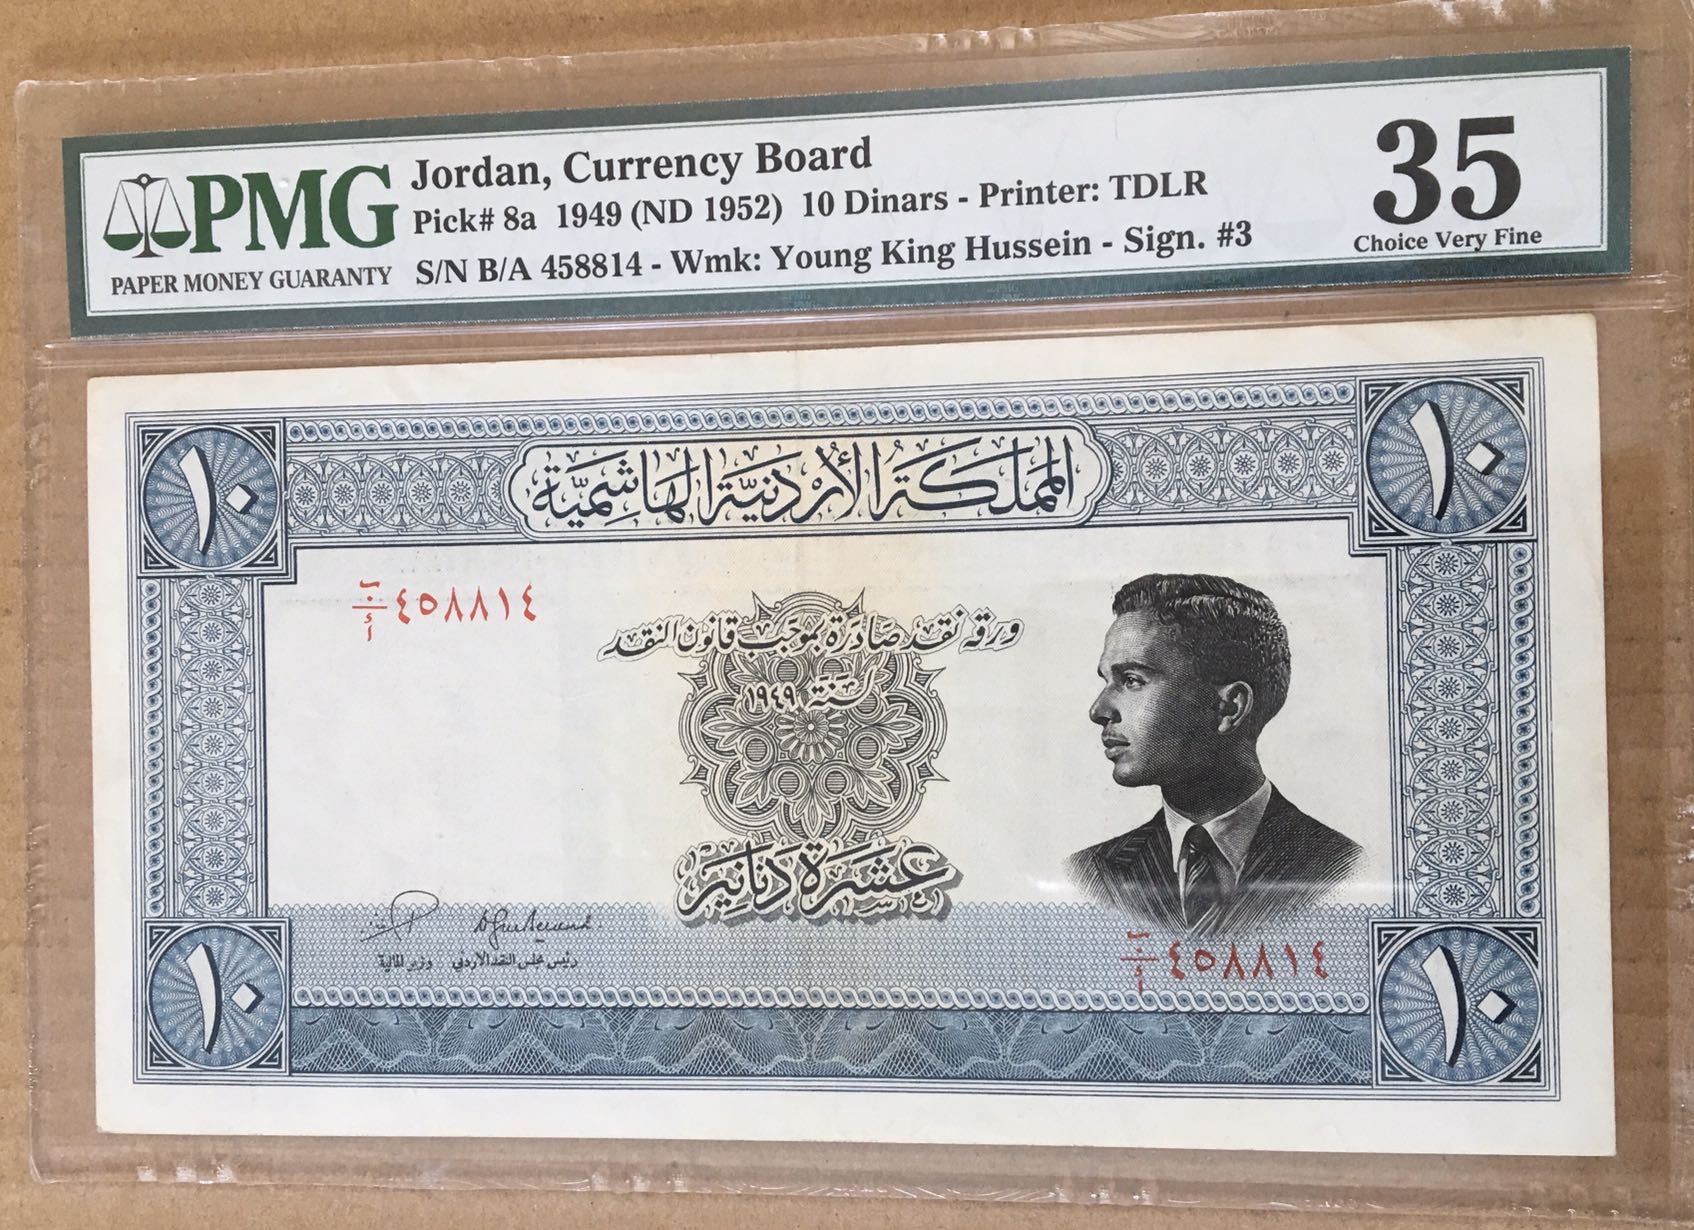 1949 (ND 1952) Jordan 10 Dinars Banknote Pick 8a PMG 35 VF Sig.#3 Young King Hussein